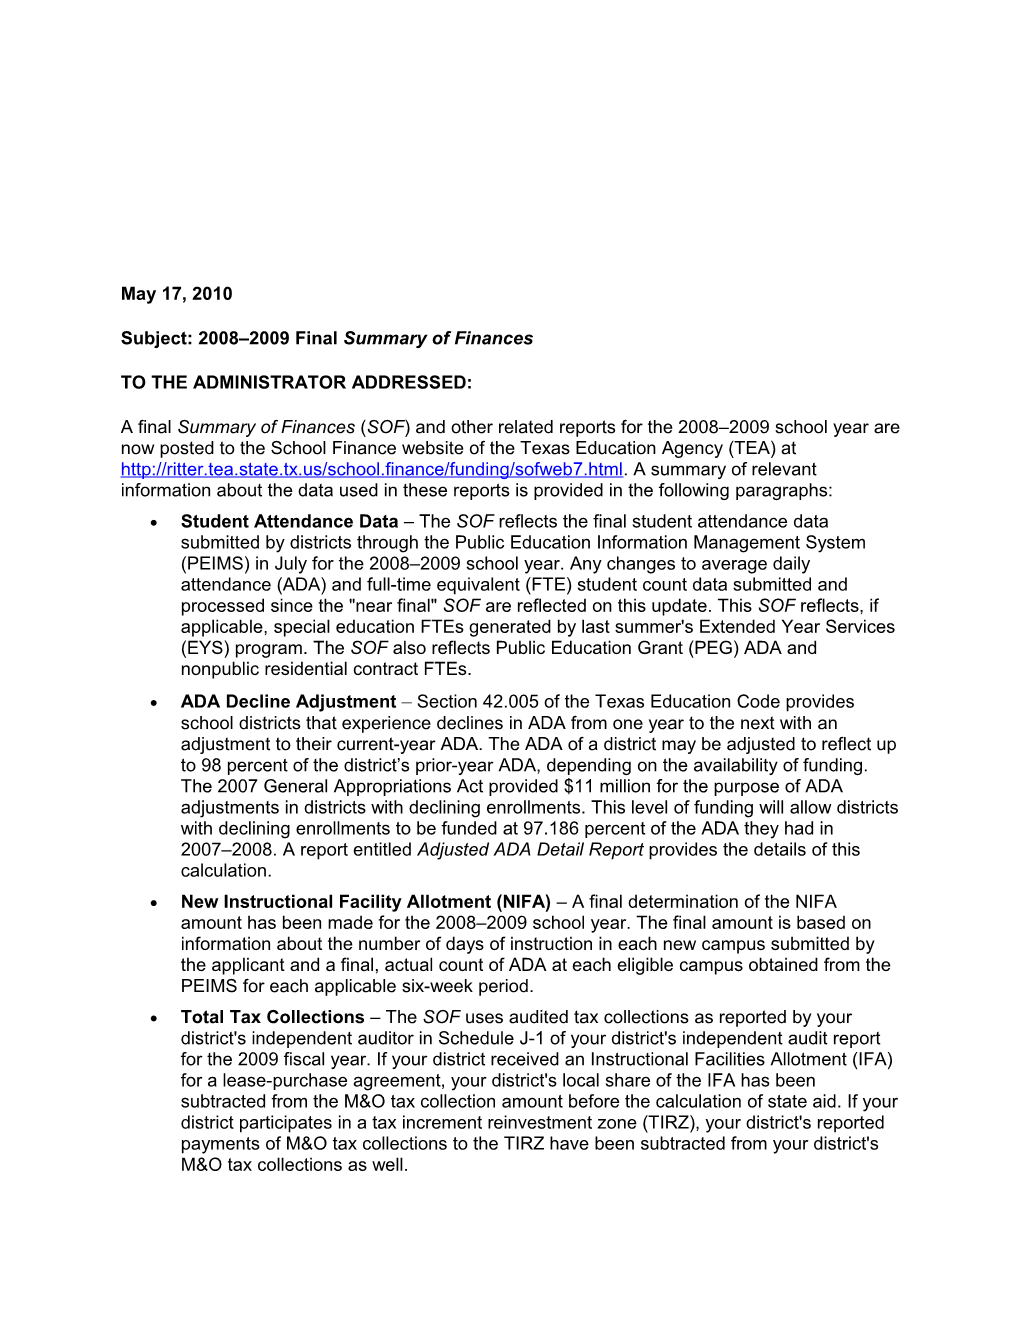 Subject: 2008 2009 Final Summary of Finances